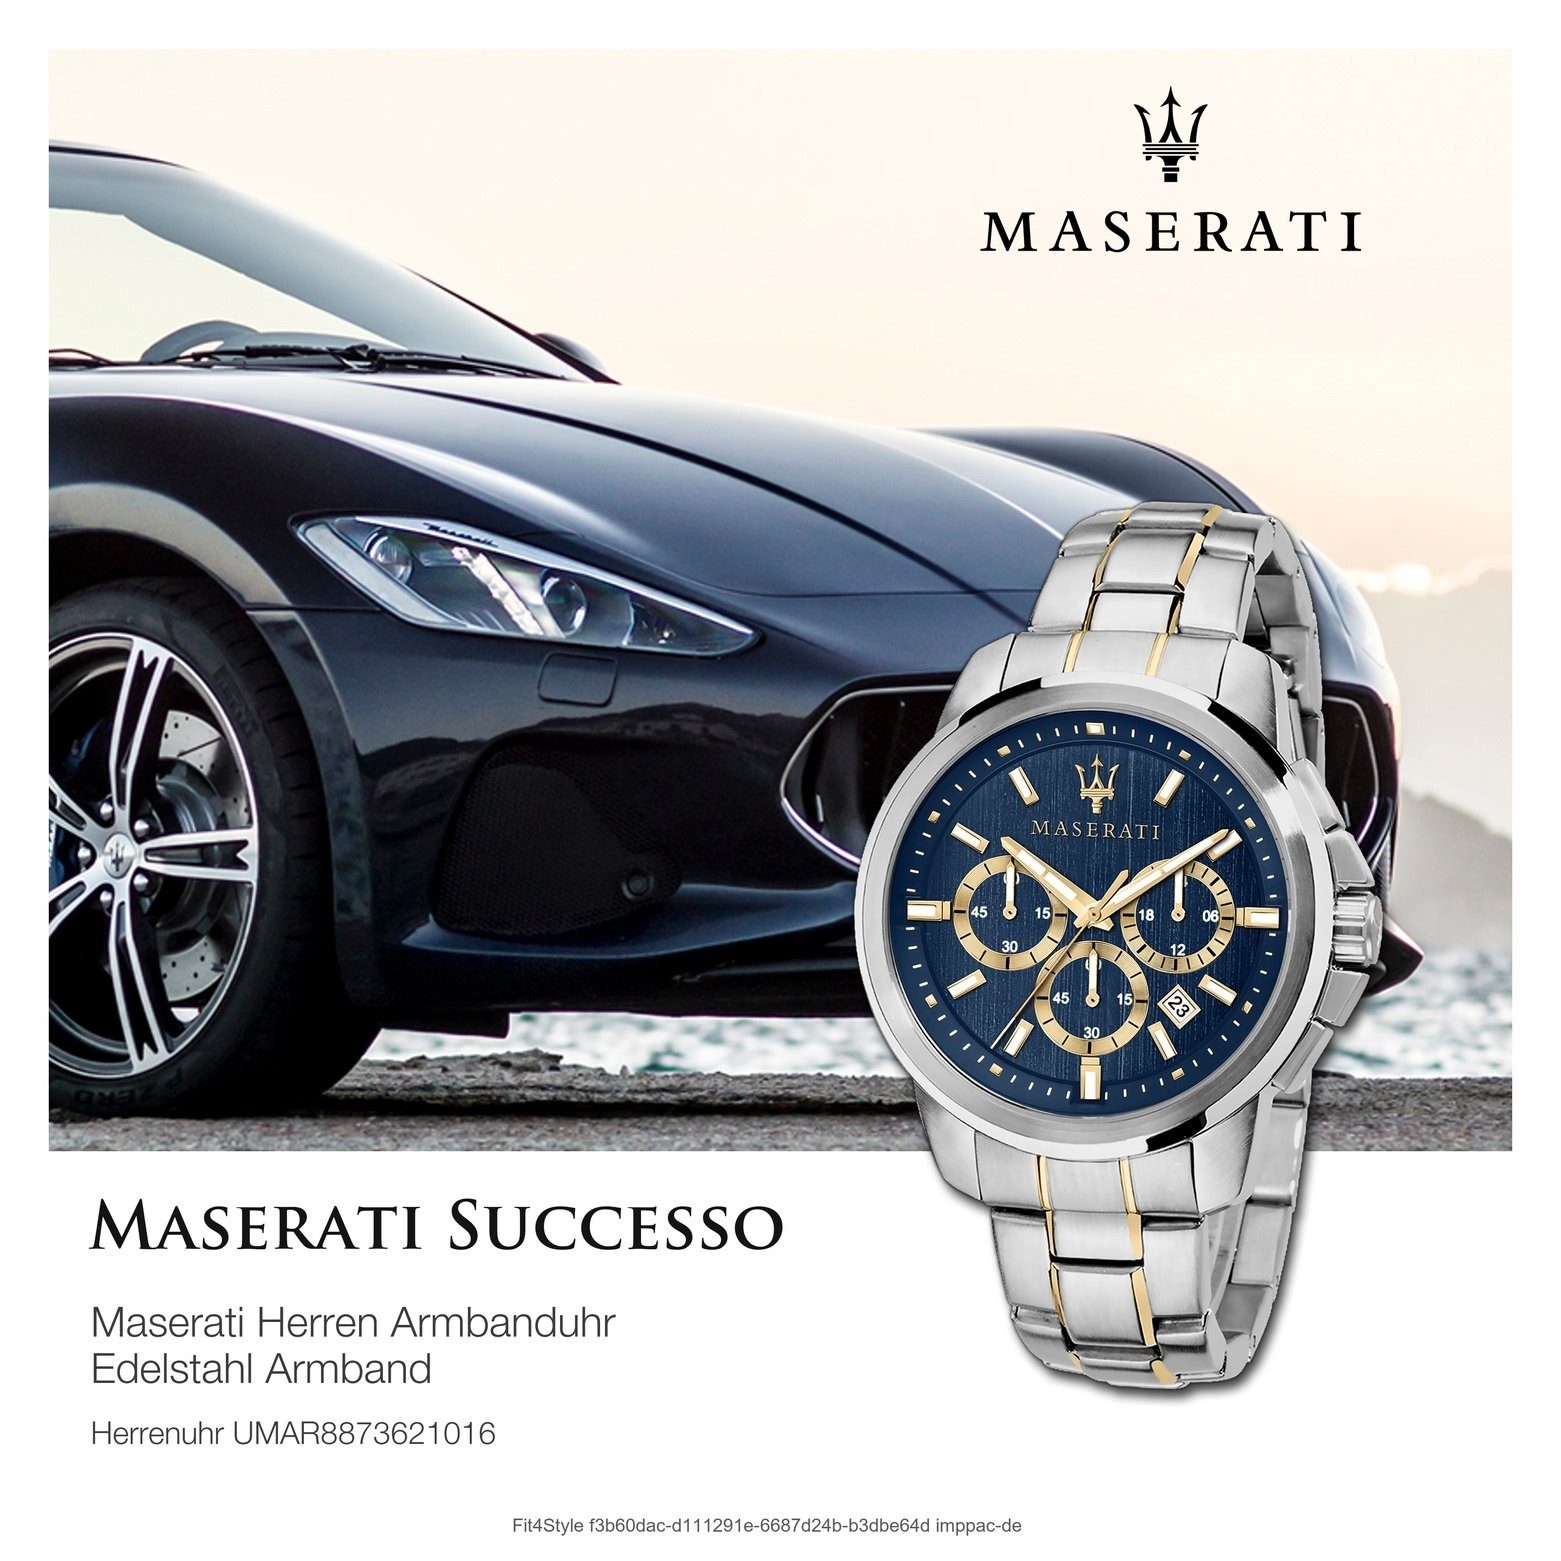 rund, (ca. Made-In Herrenuhr Italy Maserati Uhr Chronograph, groß MASERATI 52x44mm) gold Edelstahlarmband, Herren blau, Chronograph bicolor,